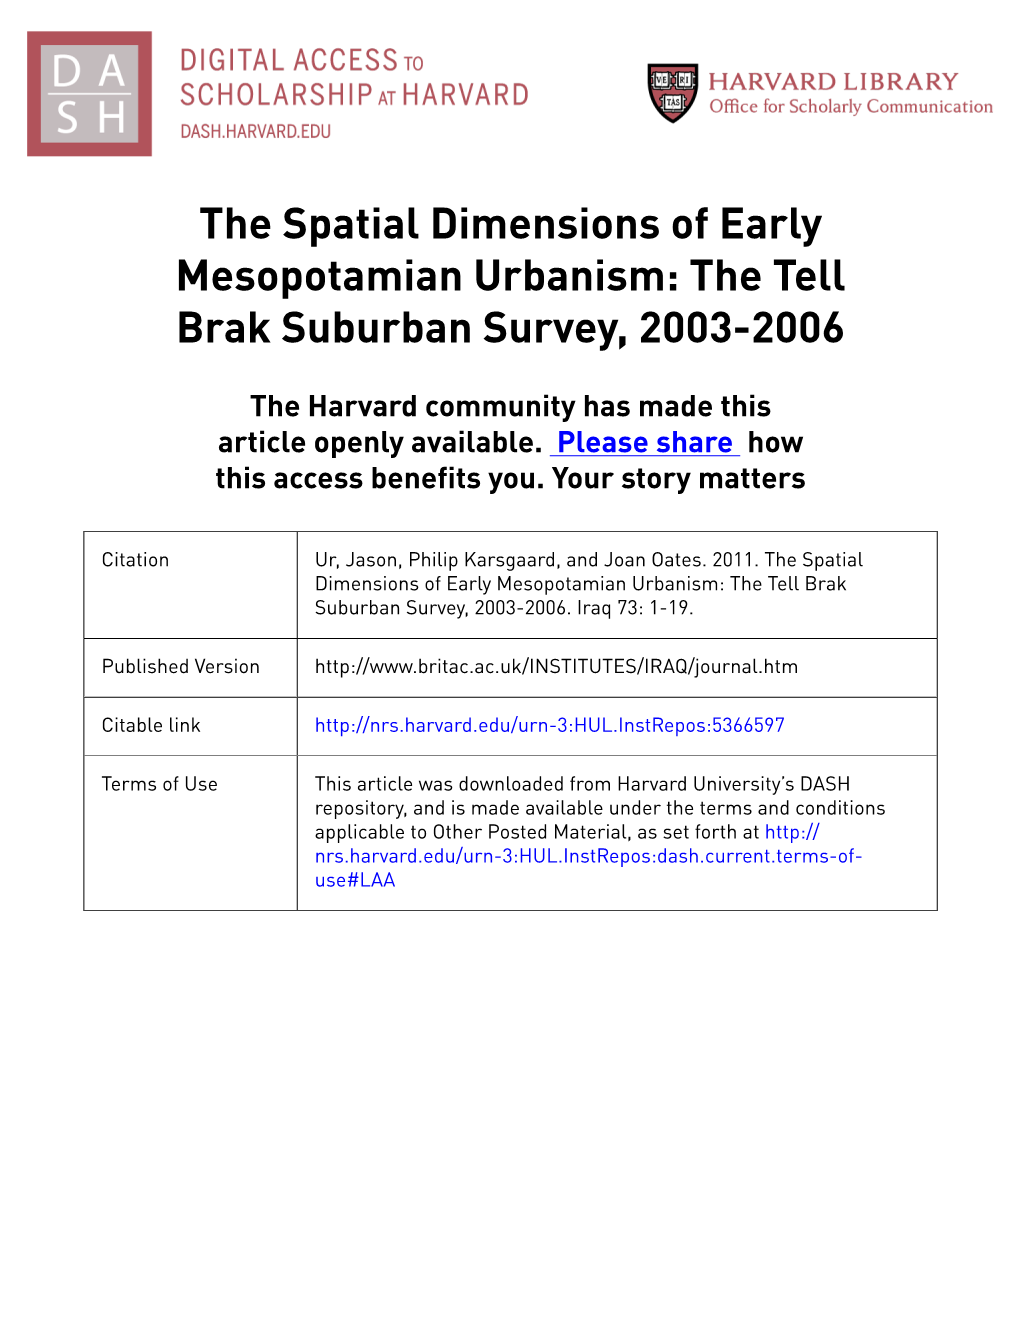 The Spatial Dimensions of Early Mesopotamian Urbanism: the Tell Brak Suburban Survey, 2003-2006